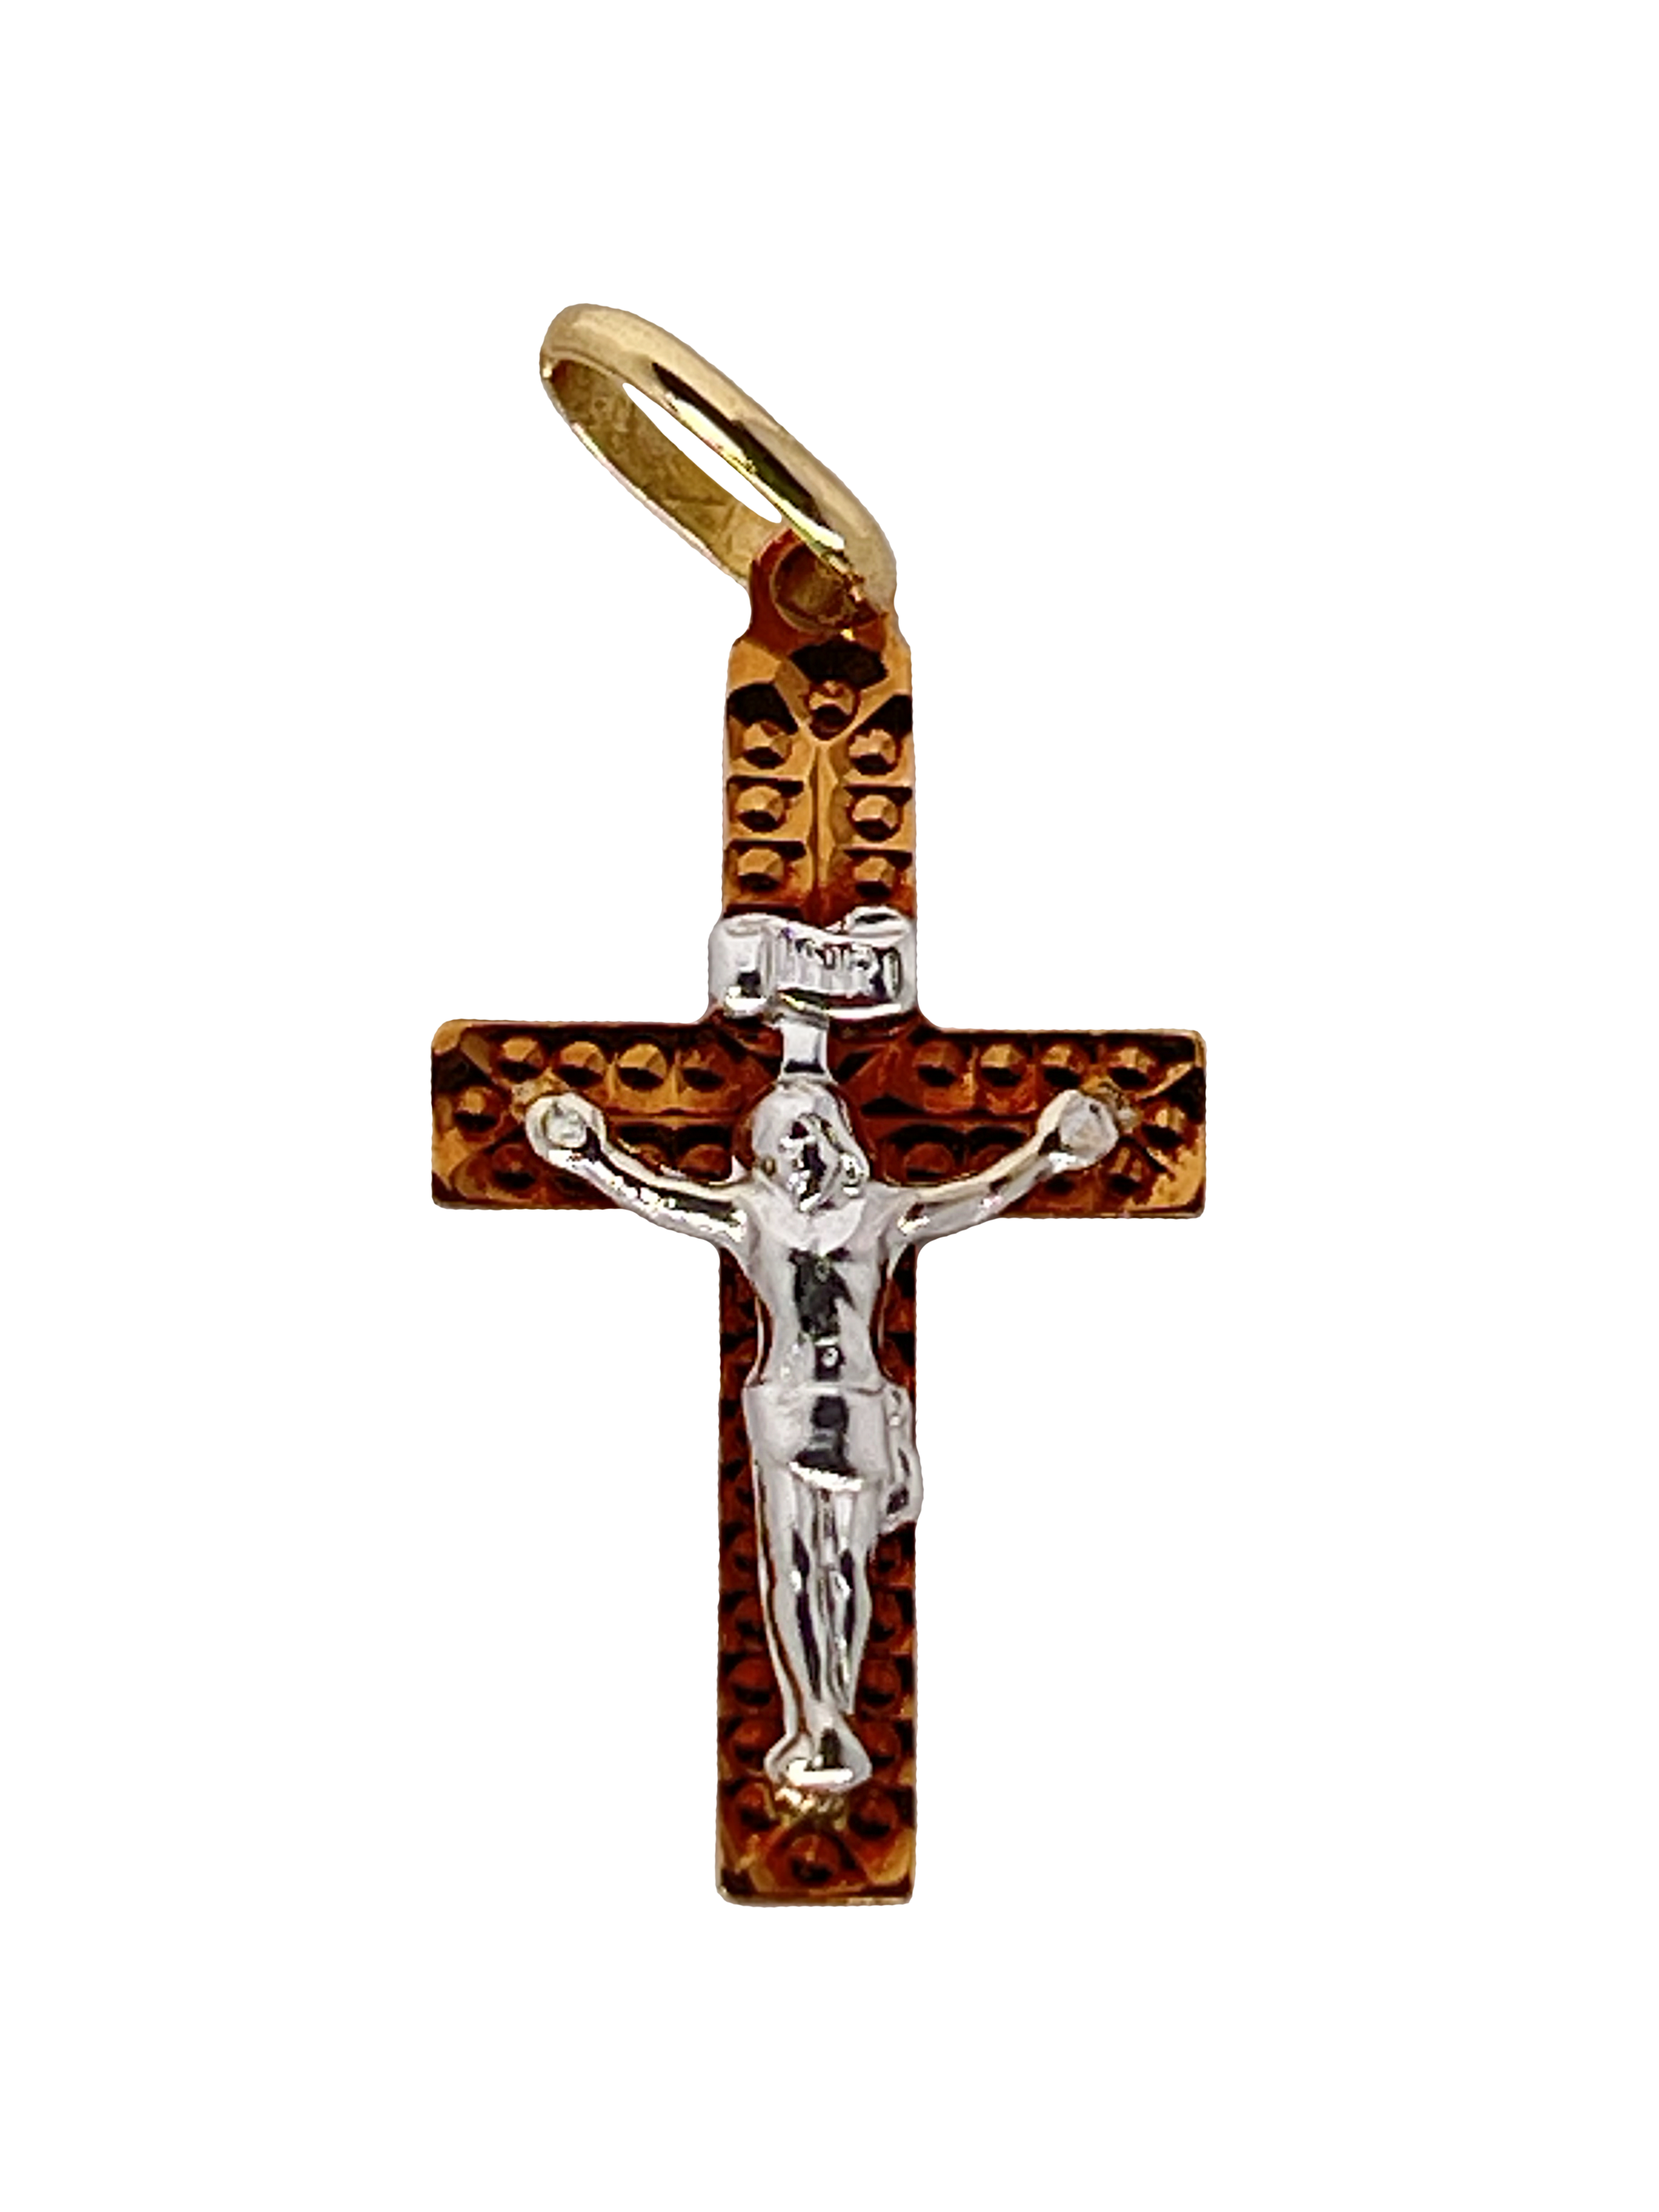 Rosé goud gouden kruis met Jezus Christus in wit goud